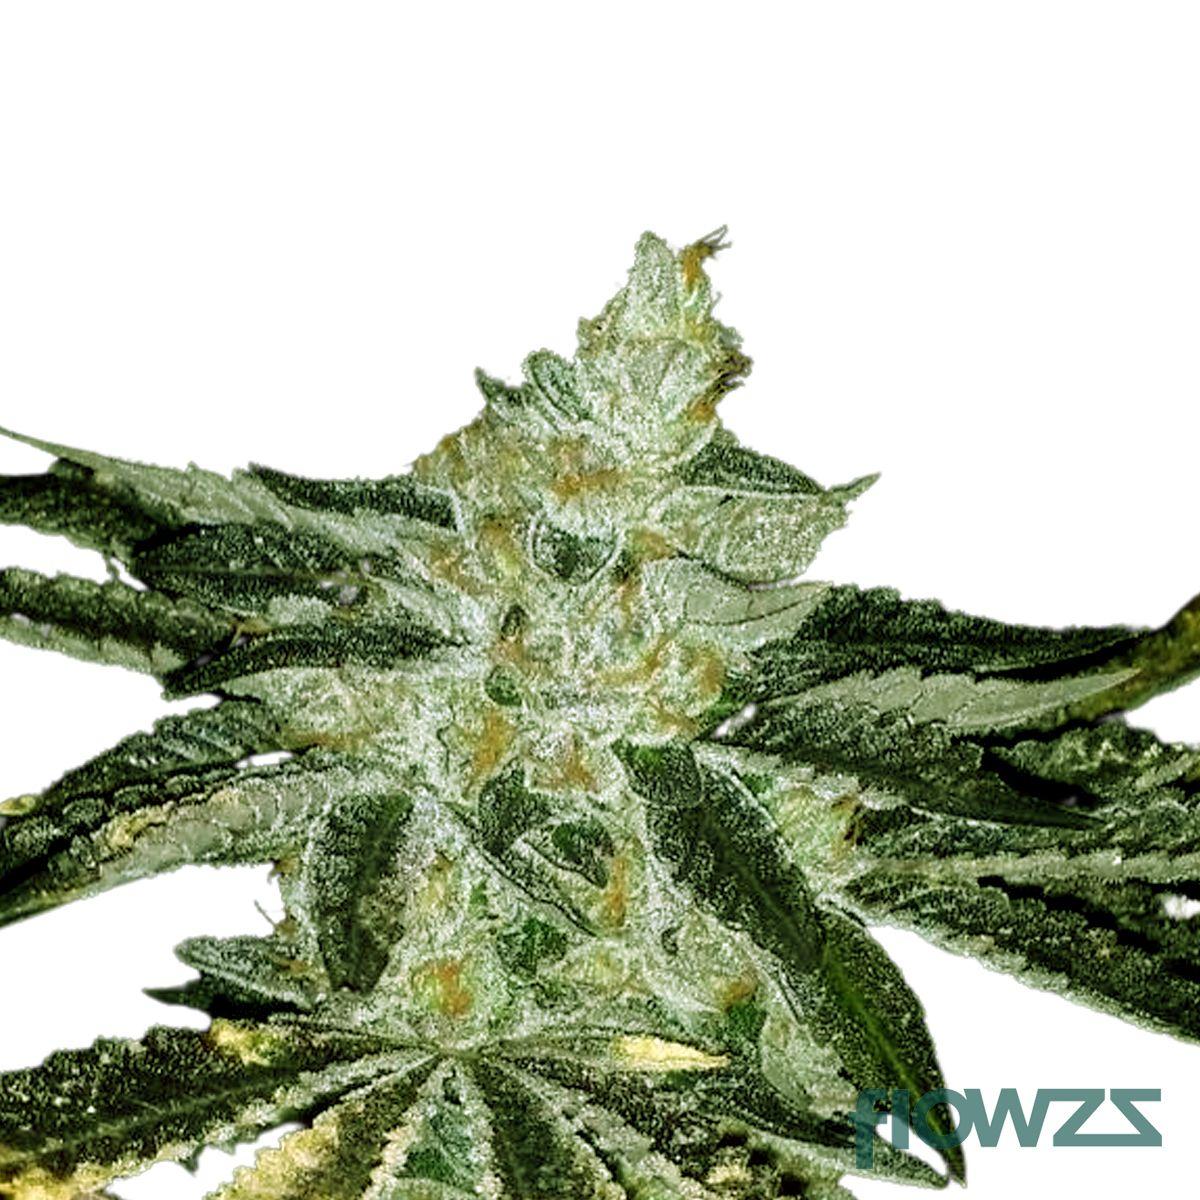 Rockstar Cannabis Strain - flowzz.com Preisvergleich